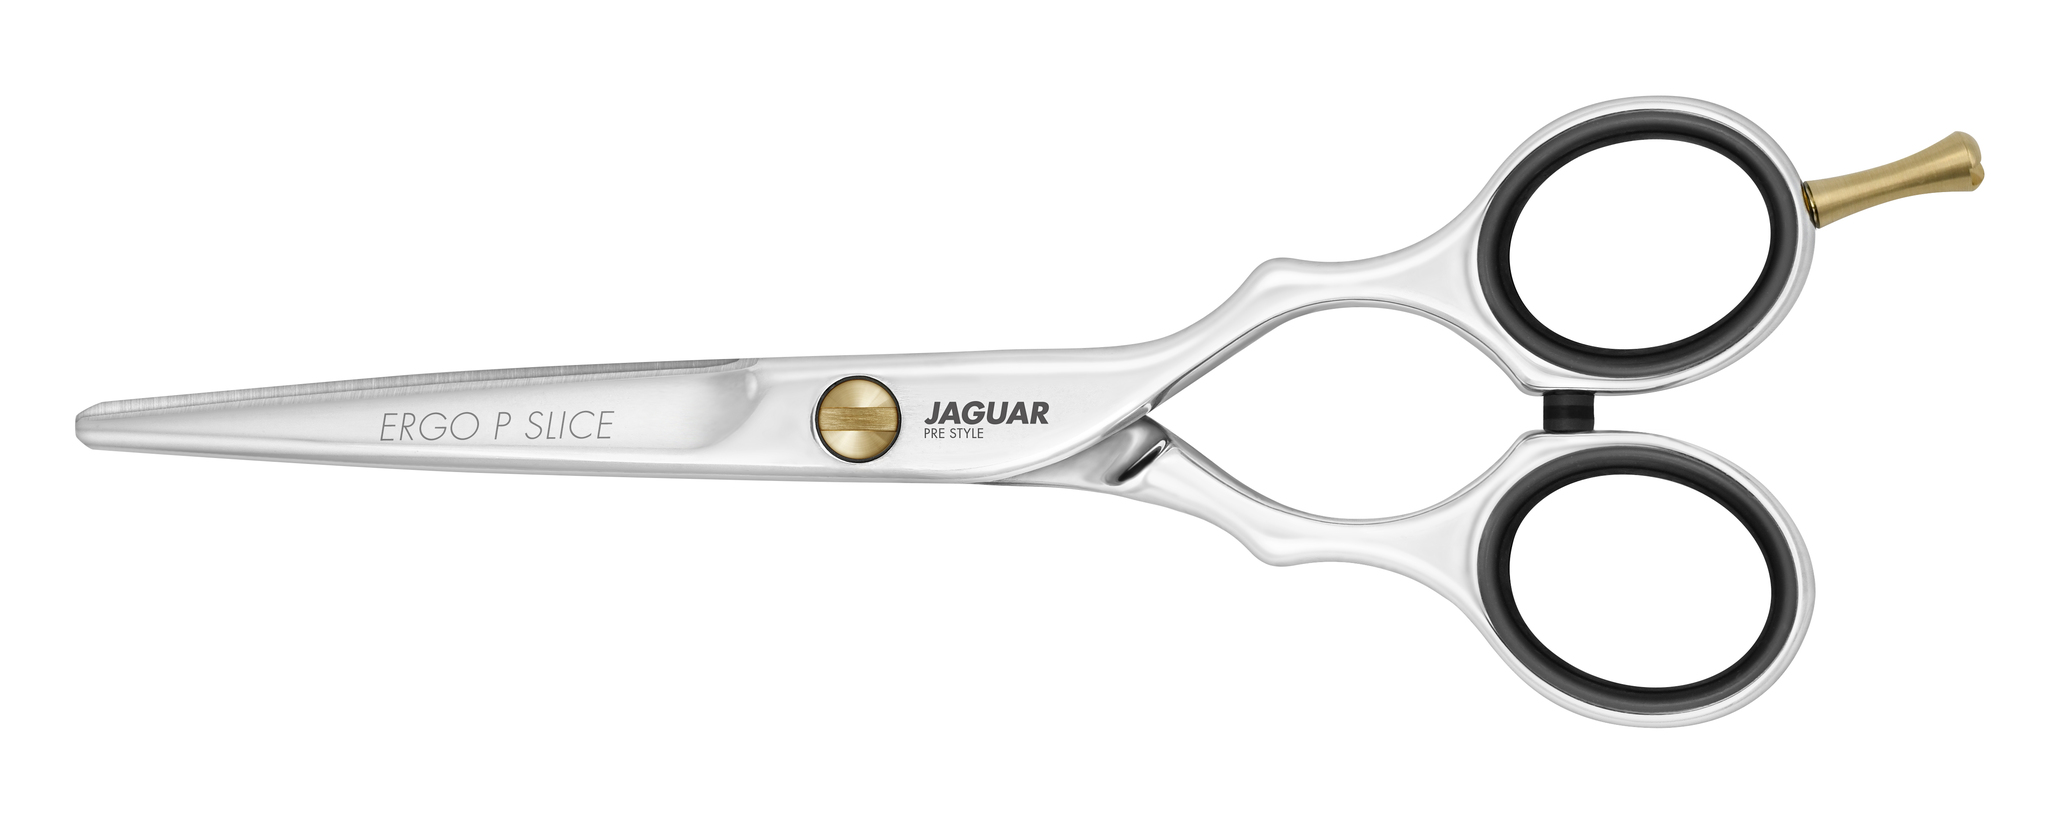 jaguar Pre Style Ergo P Slice